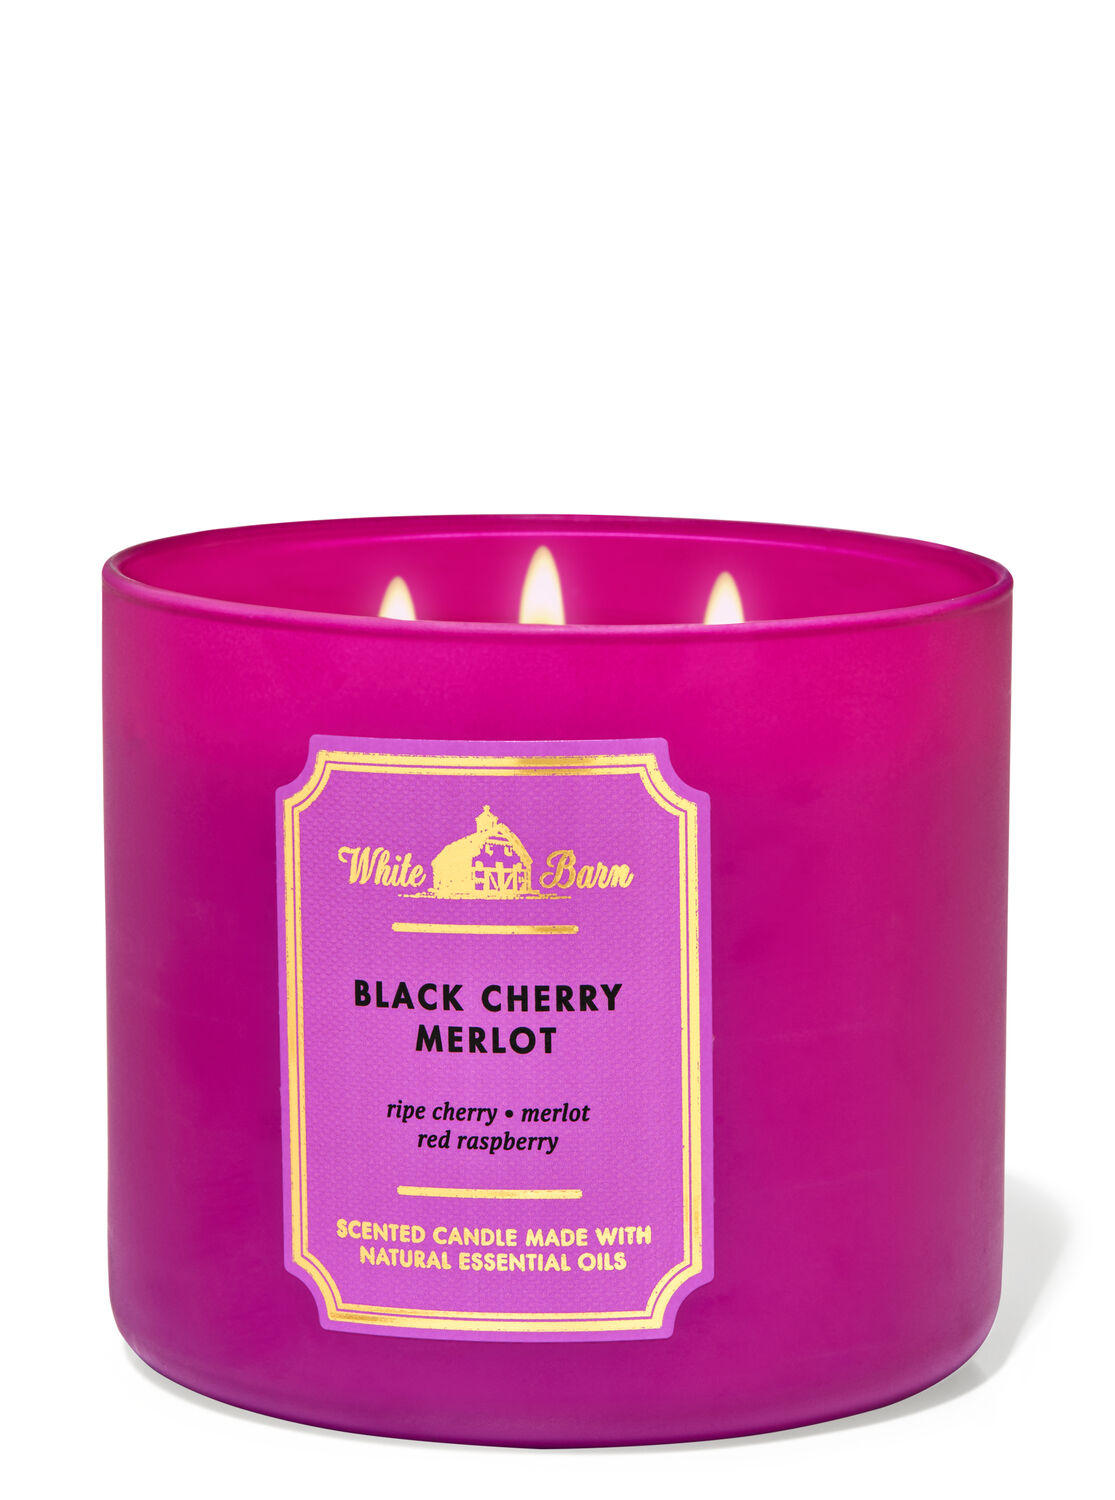 Merlot wine scented glitter gel candle